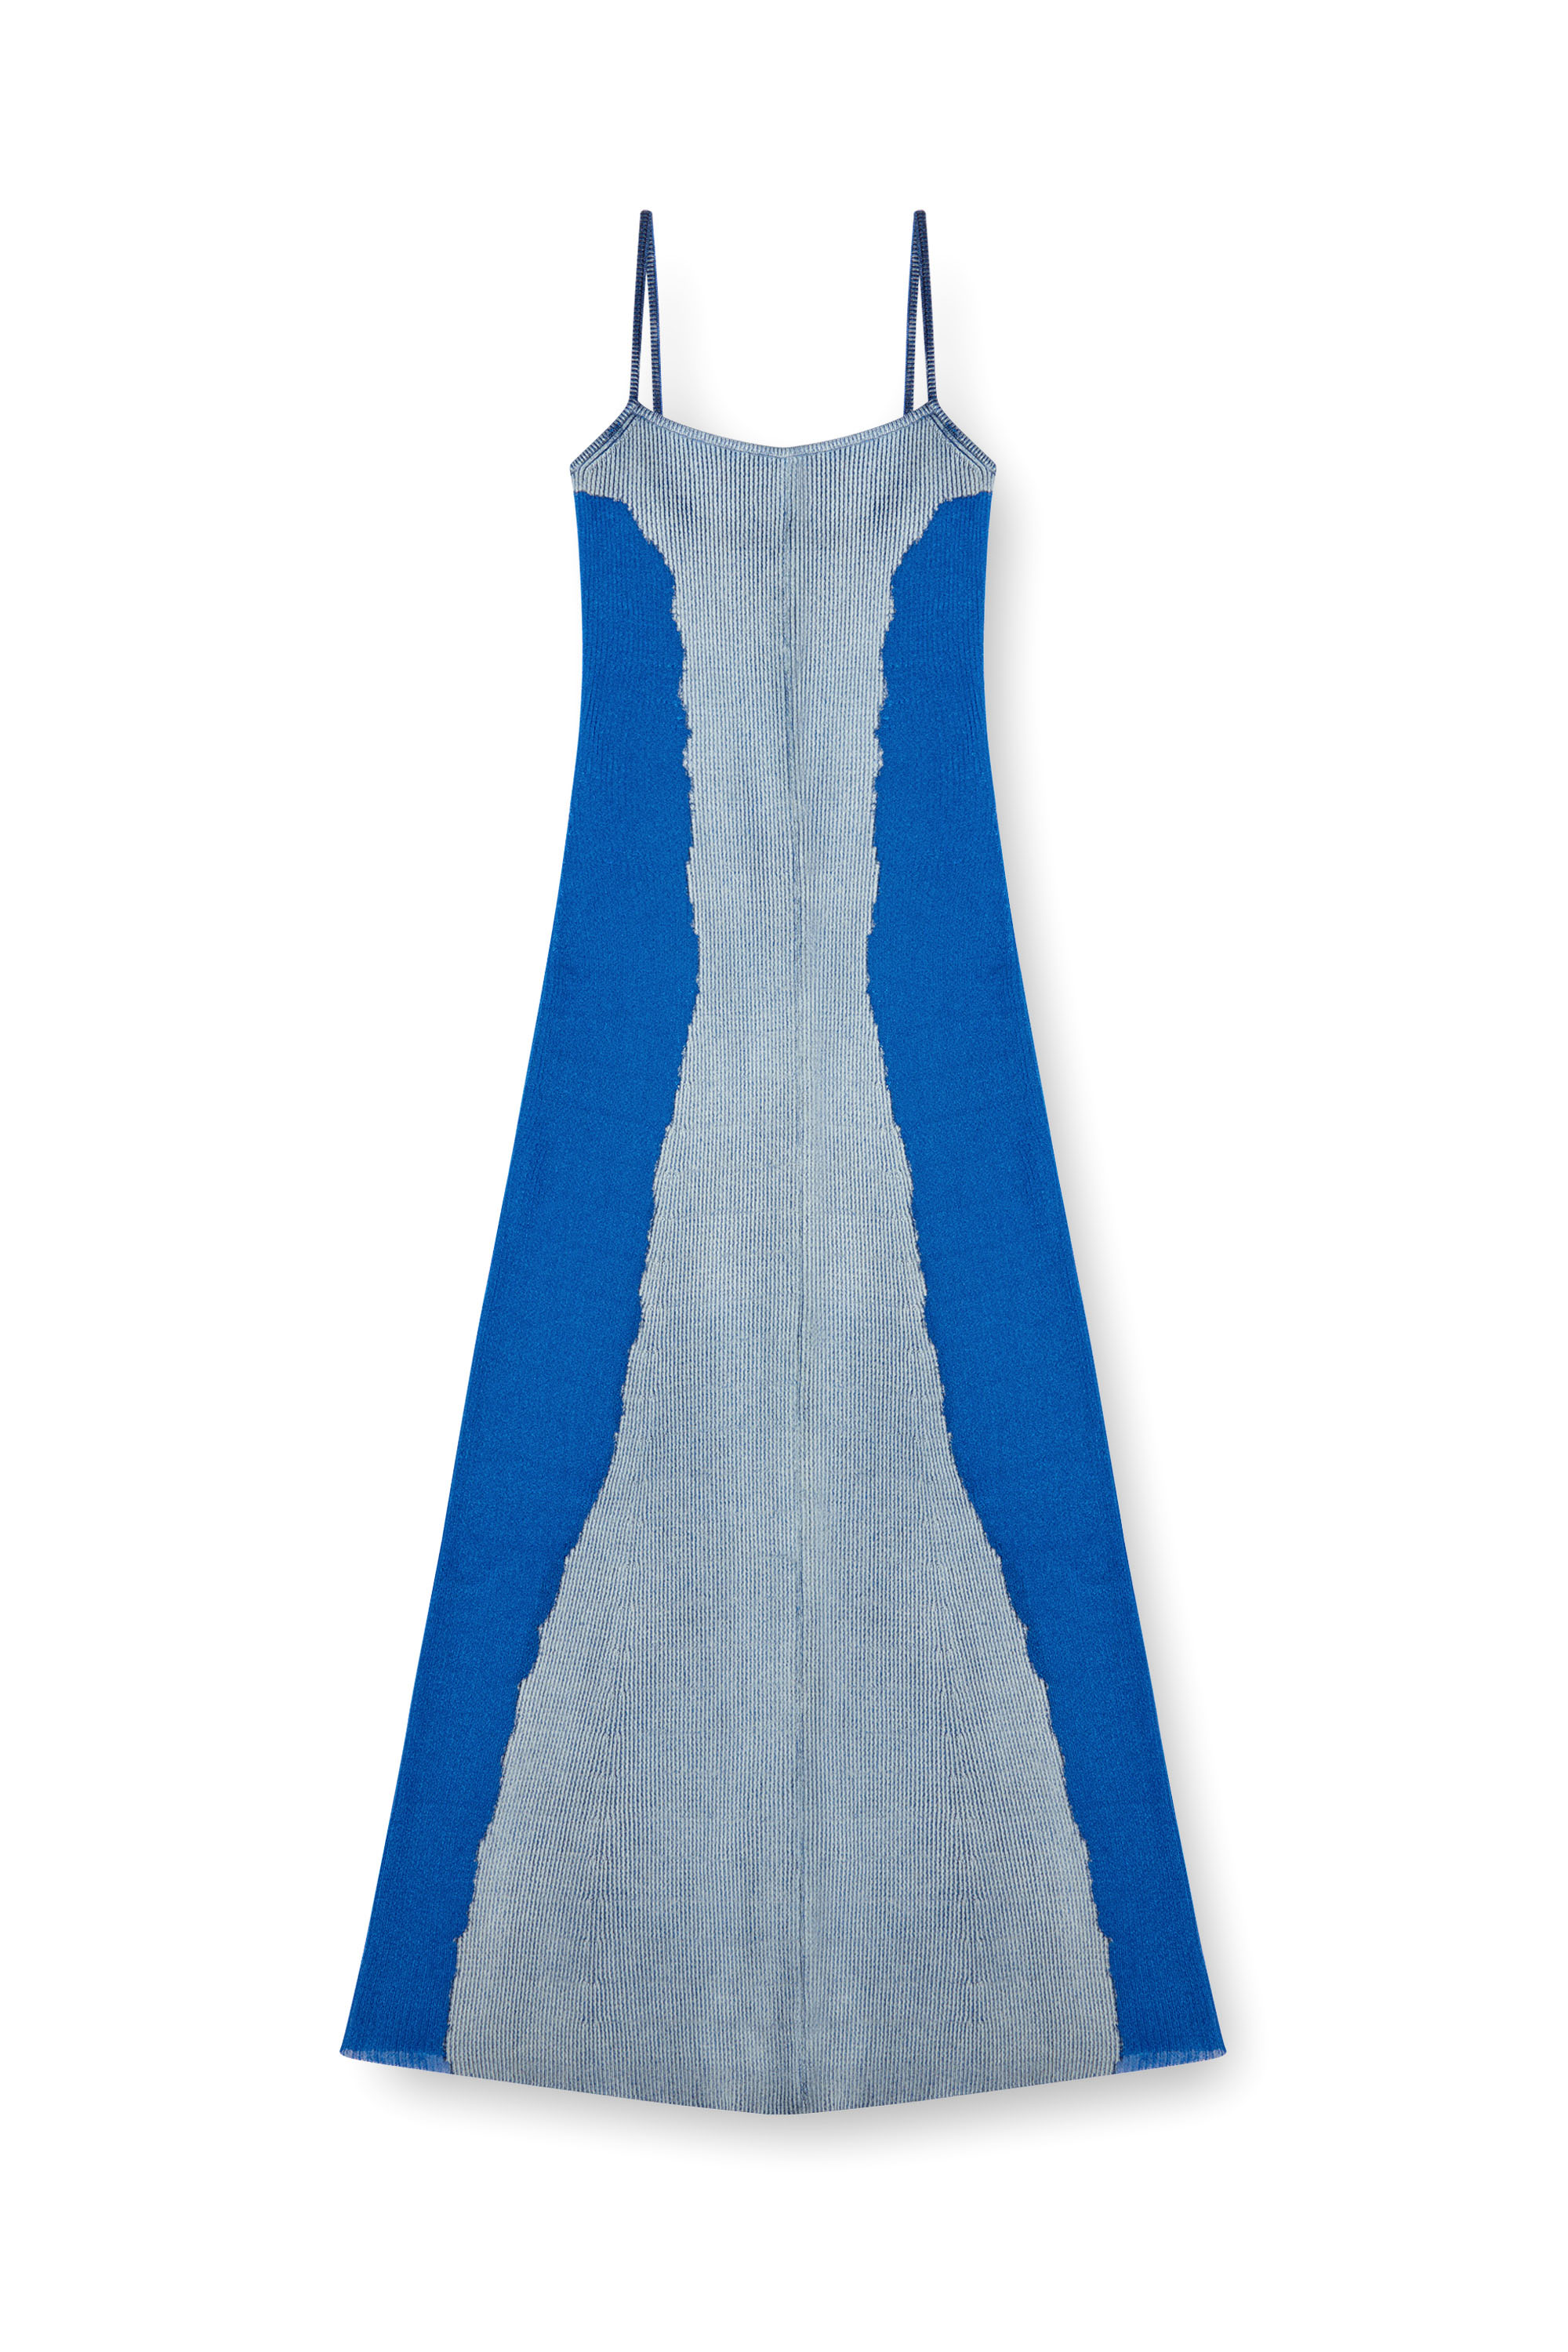 Diesel - M-EDAGLIA, Mujer Vestido lencero midi de tejido con técnica dévoré in Azul marino - Image 4